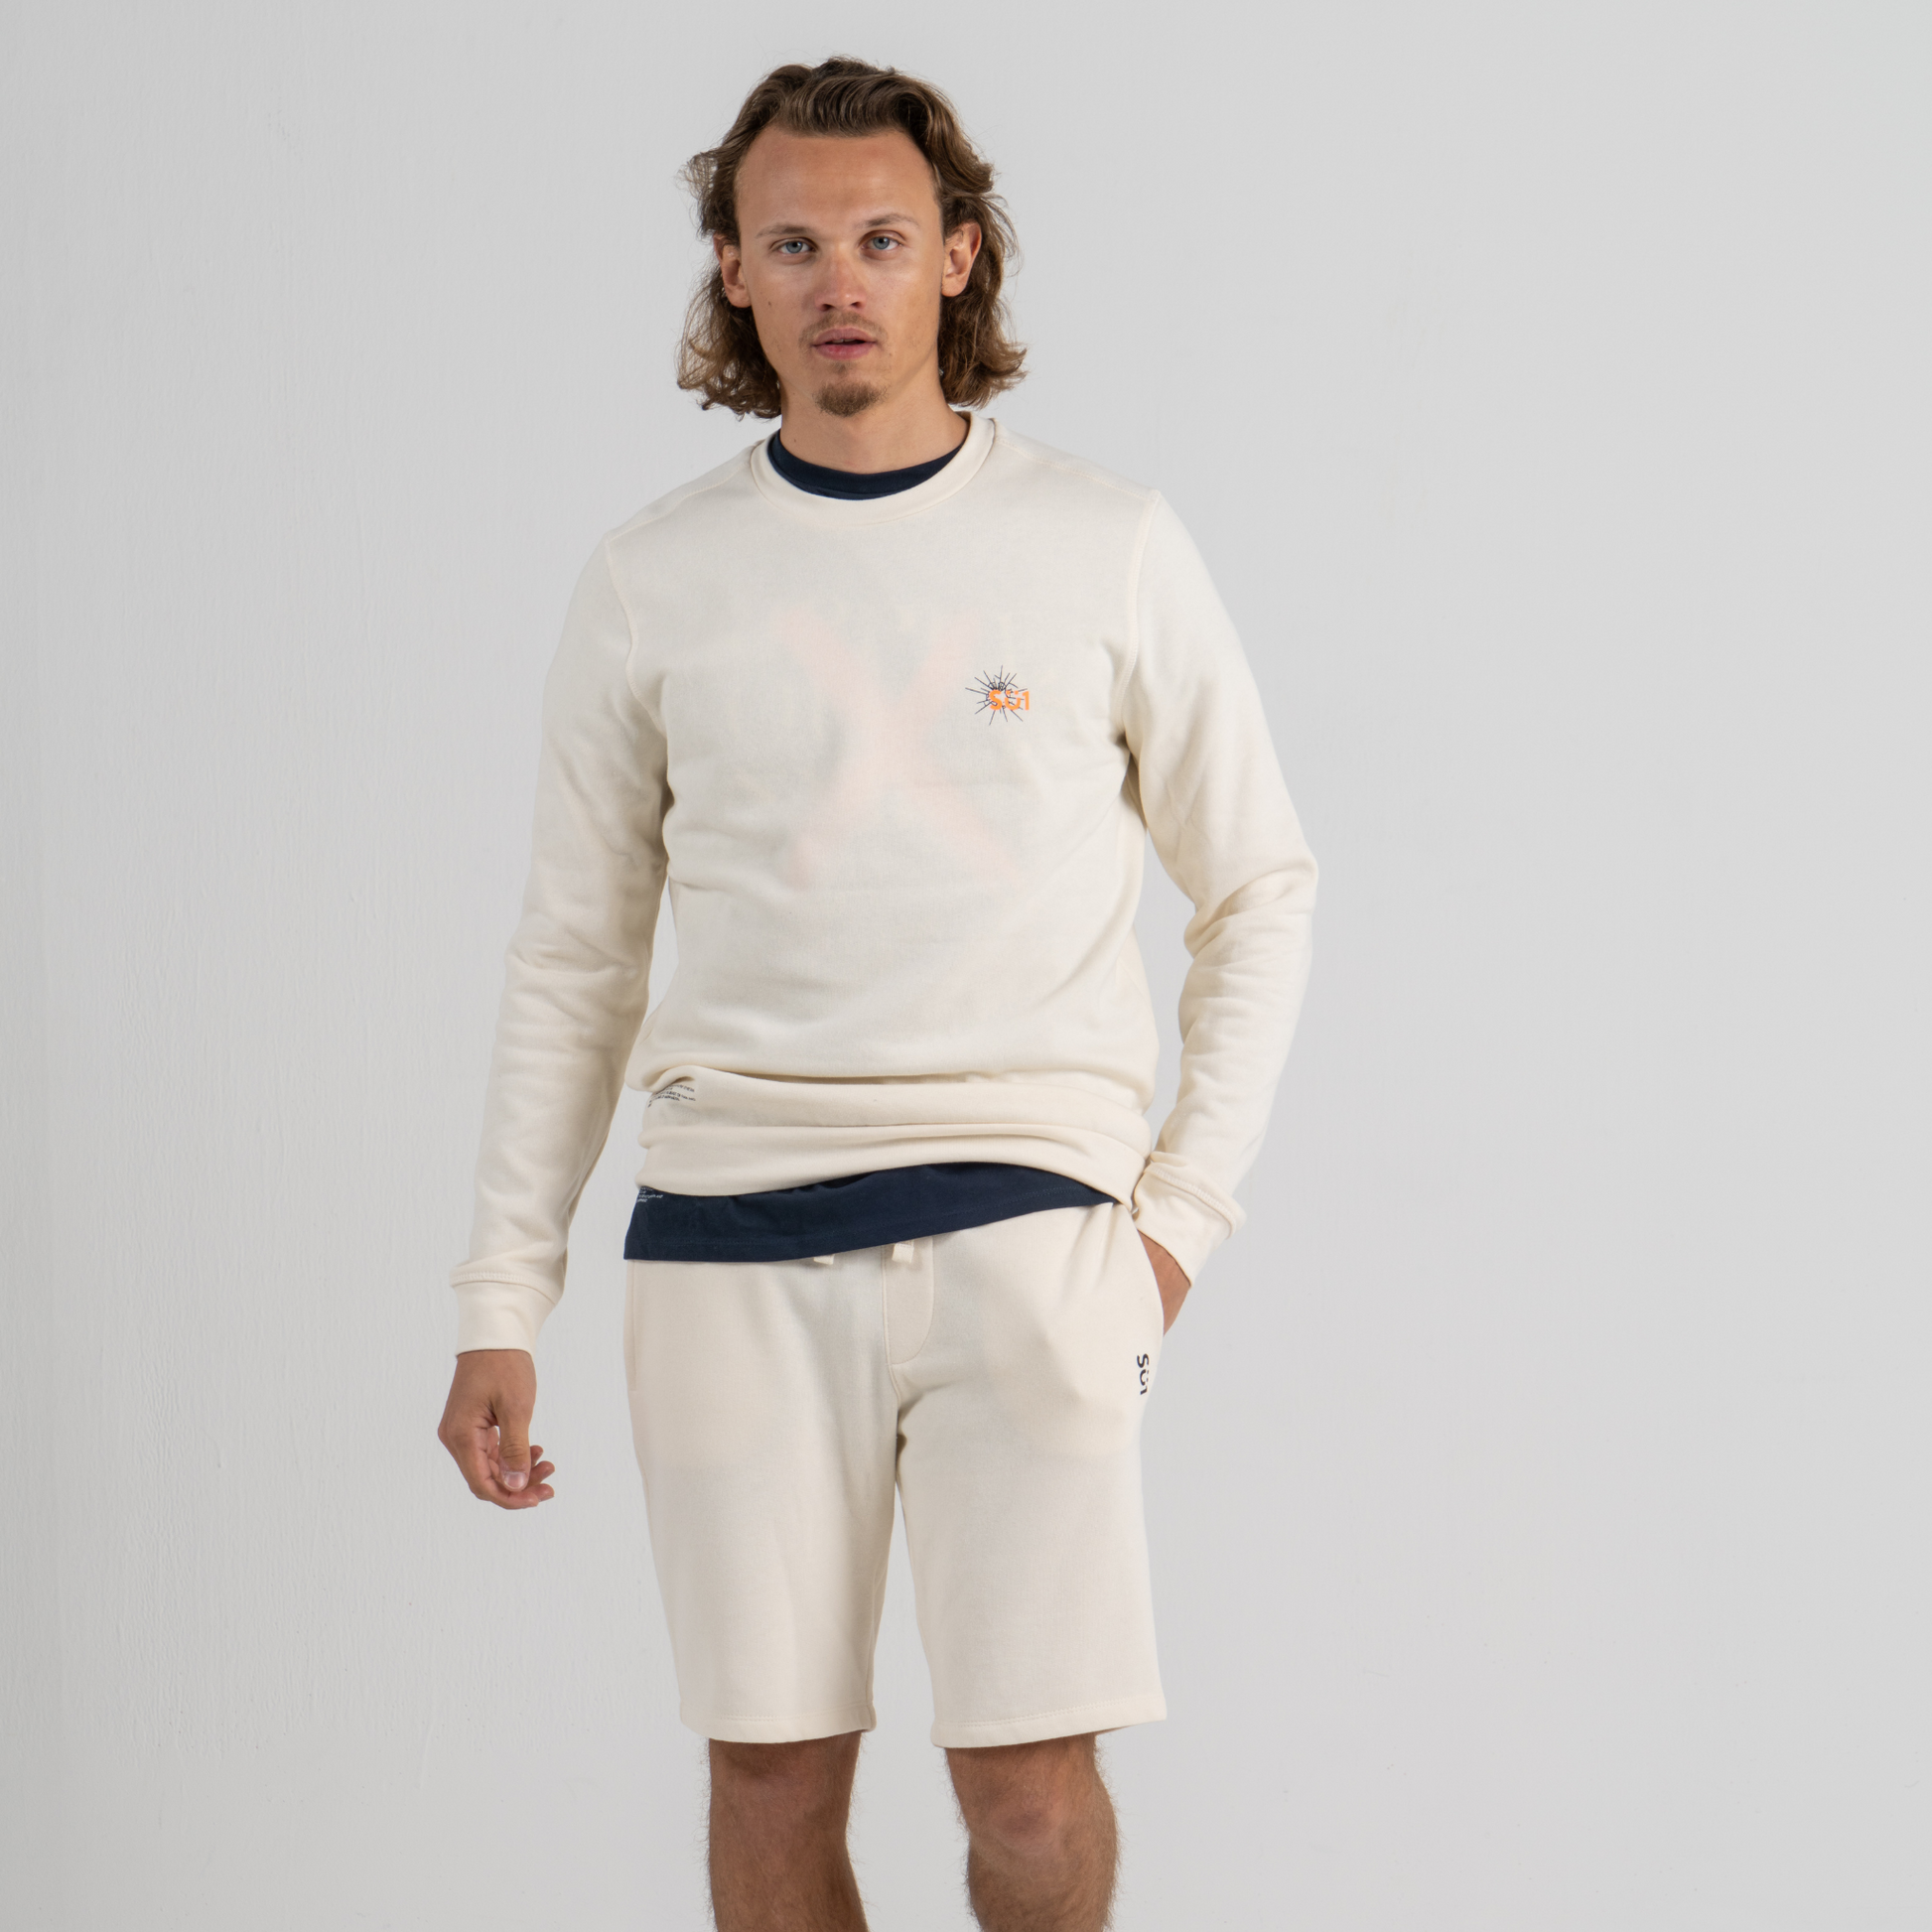 Man wearing ecru sweater SU1 clothing brand and ecru sport shorts